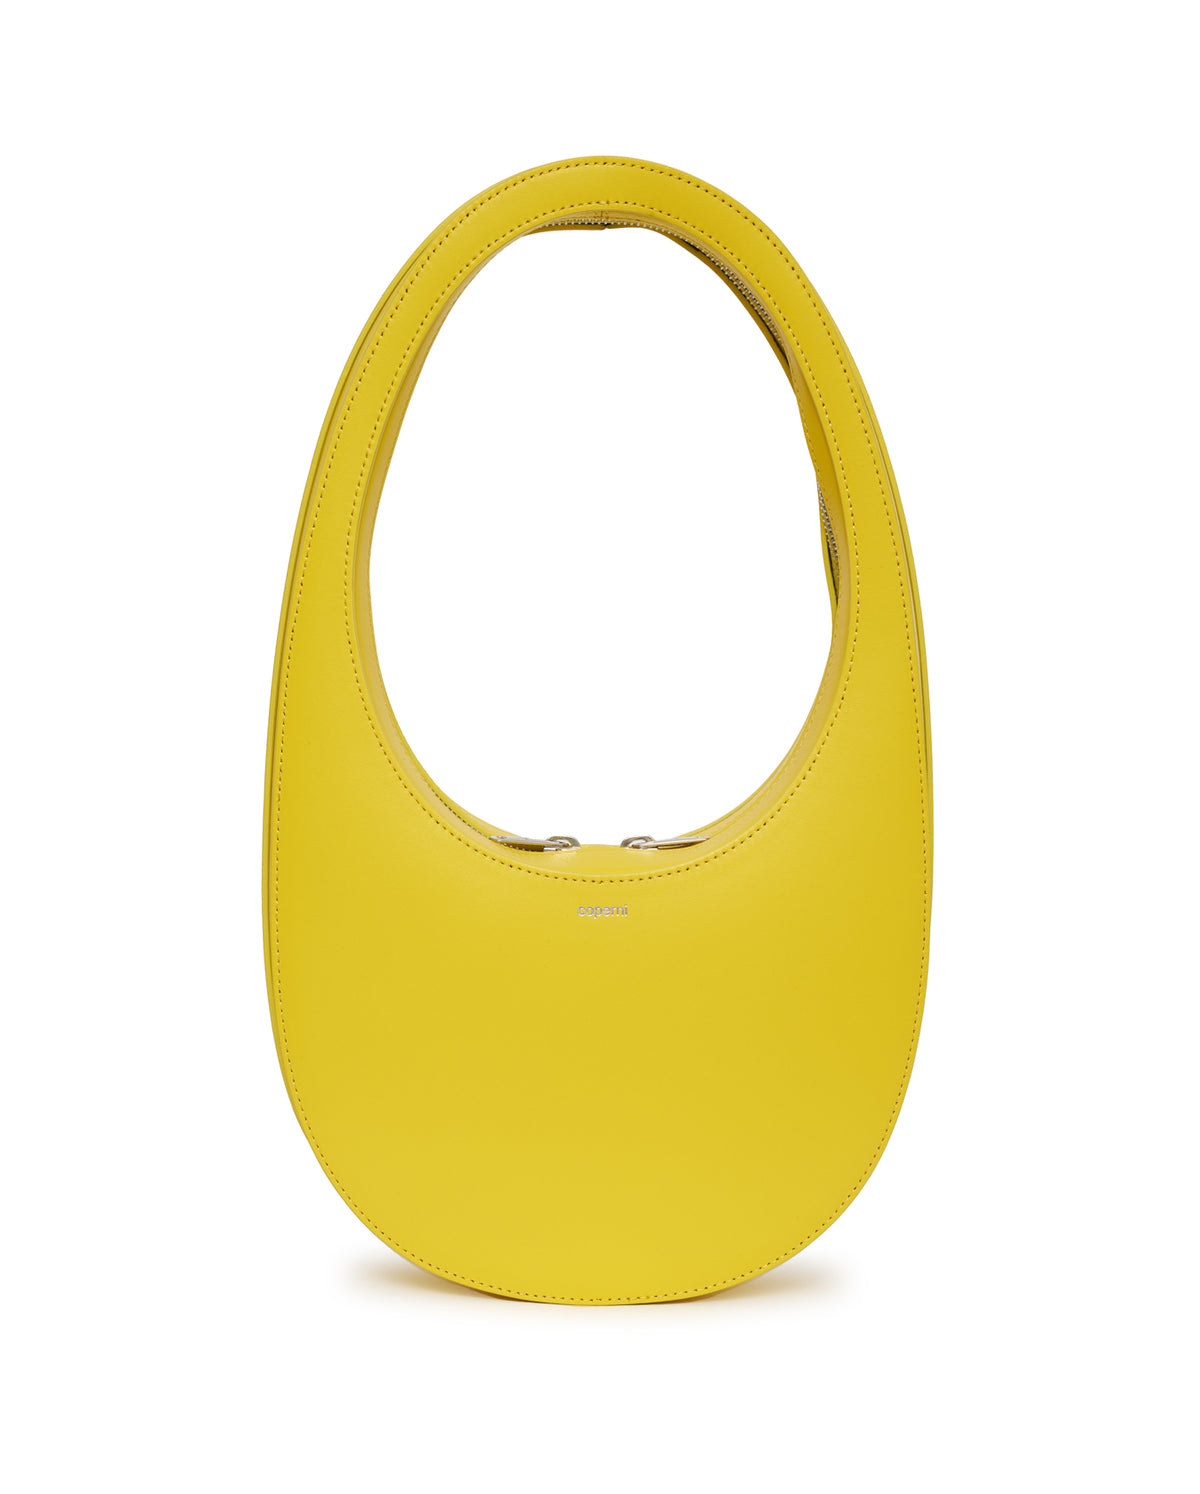 Swipe Bag - Yellow